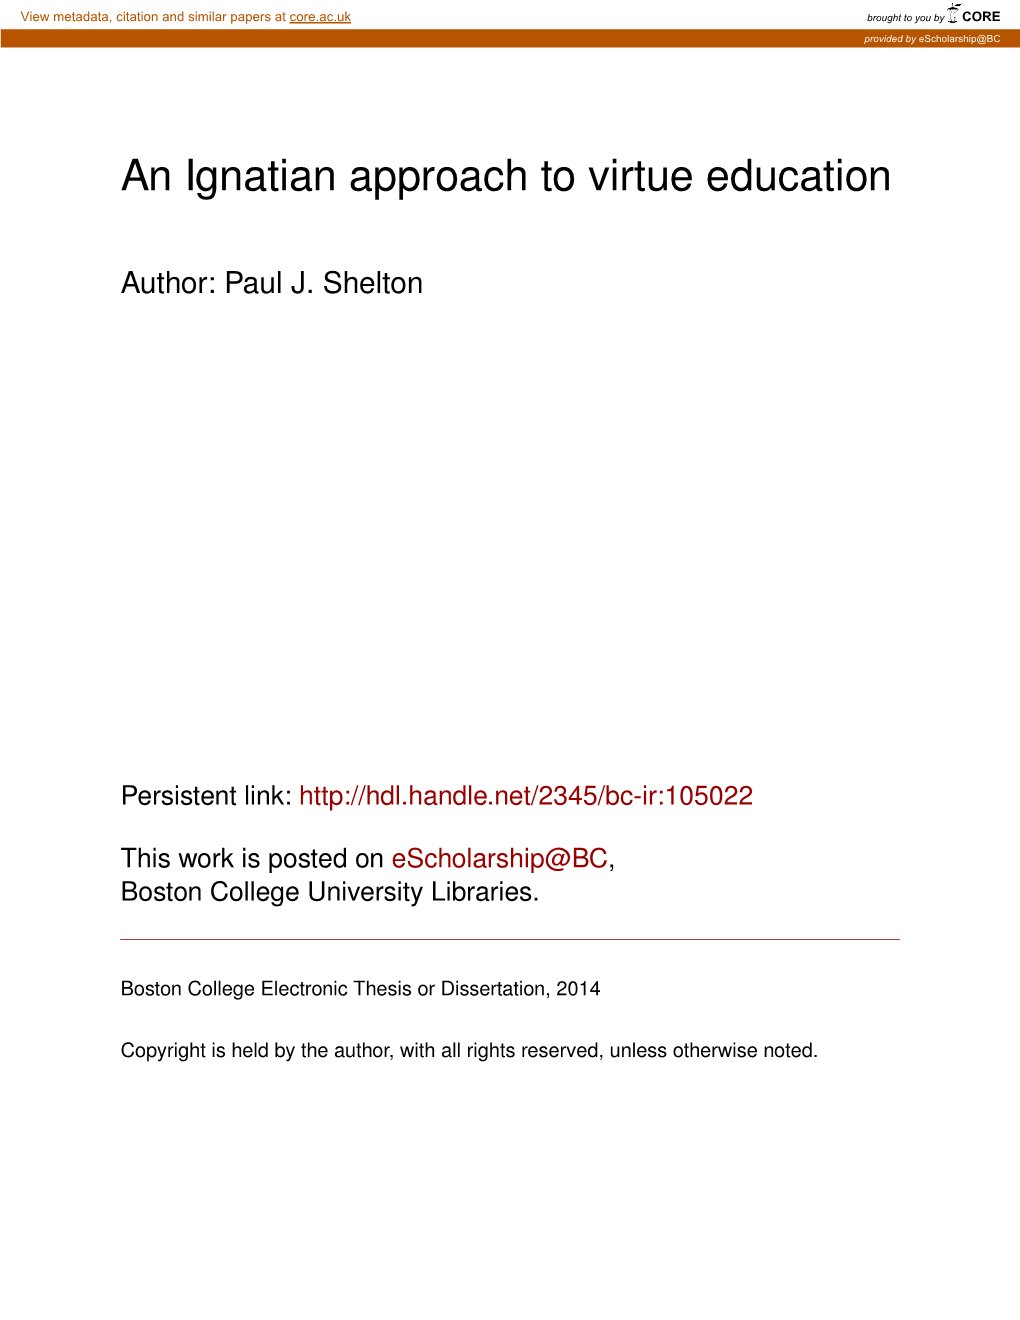 An Ignatian Approach to Virtue Education